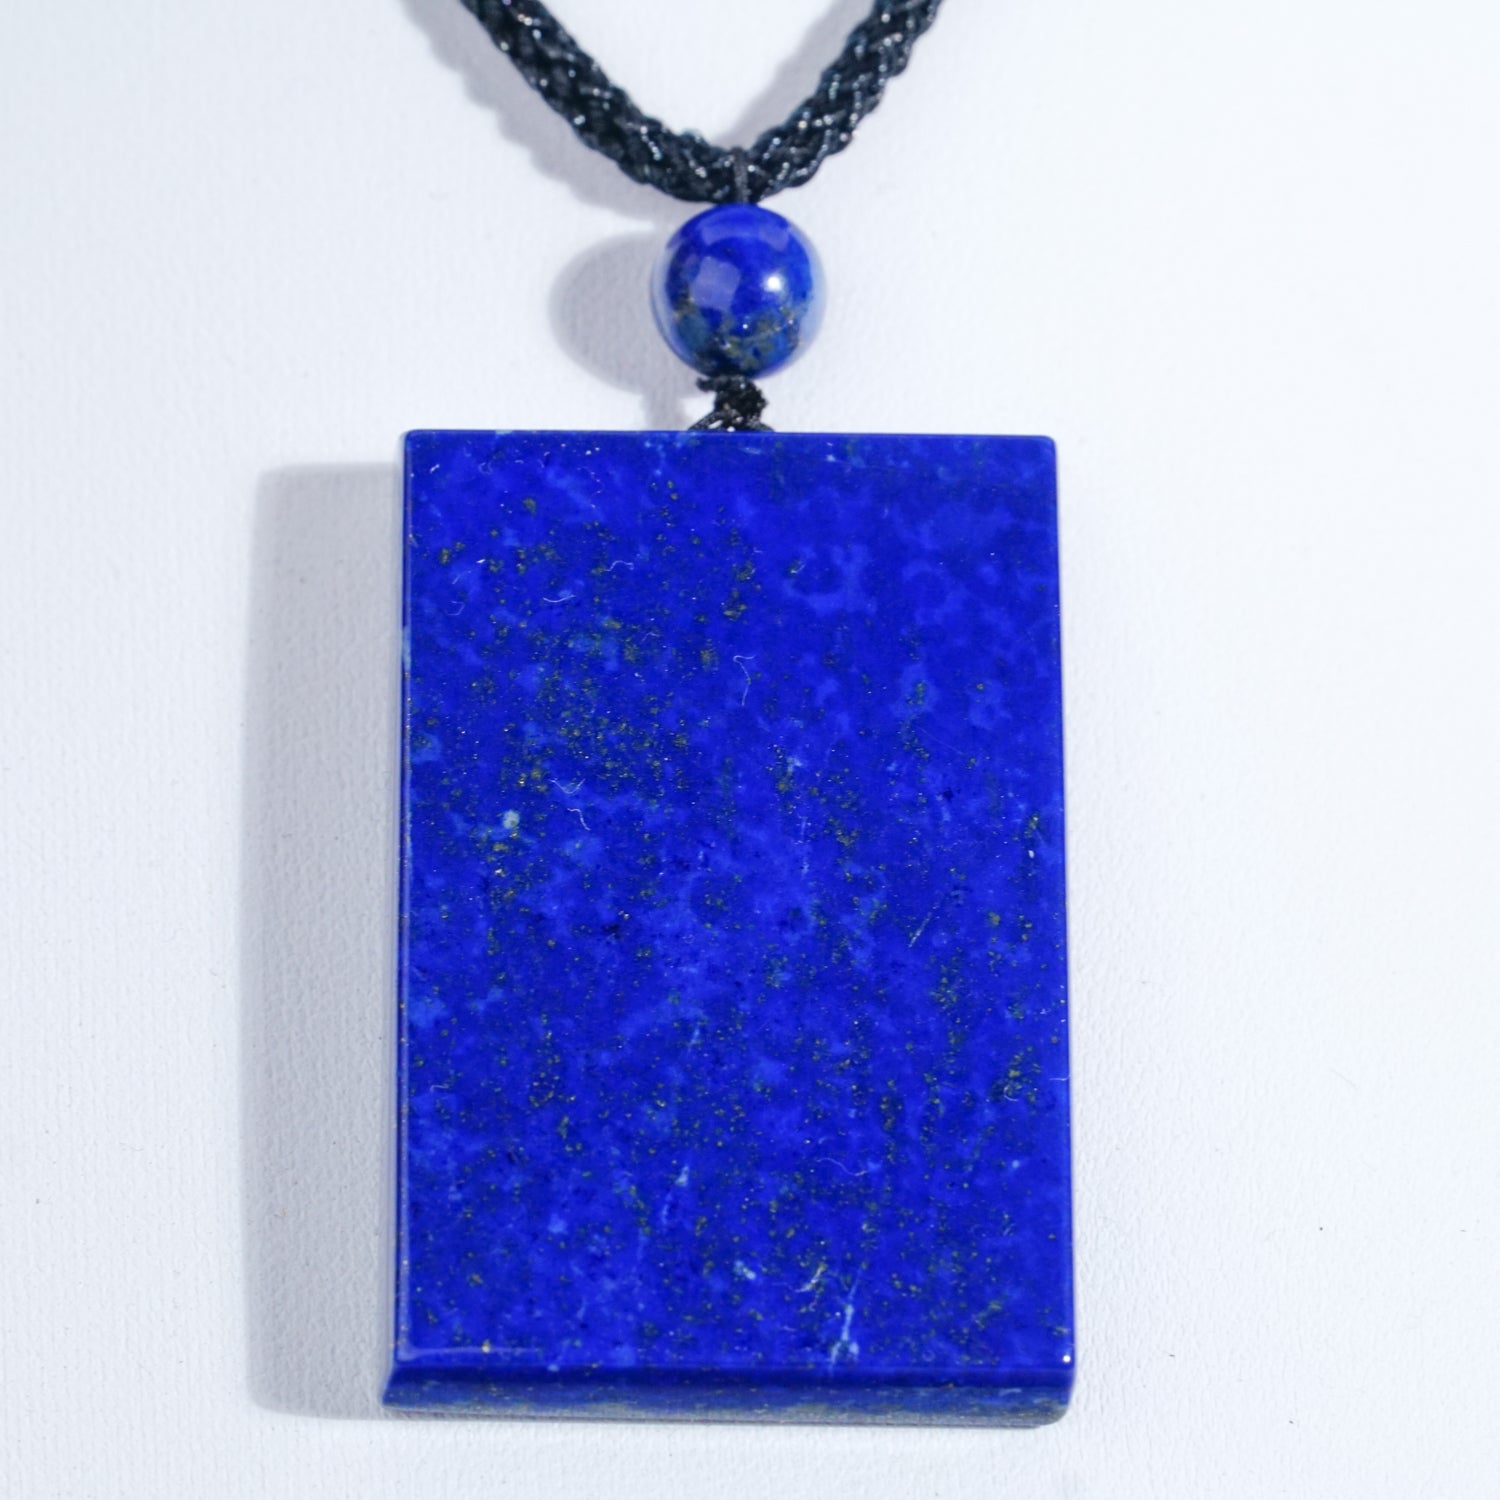 Genuine Lapis Lazuli Pendant with Adjustable Length Black Cord